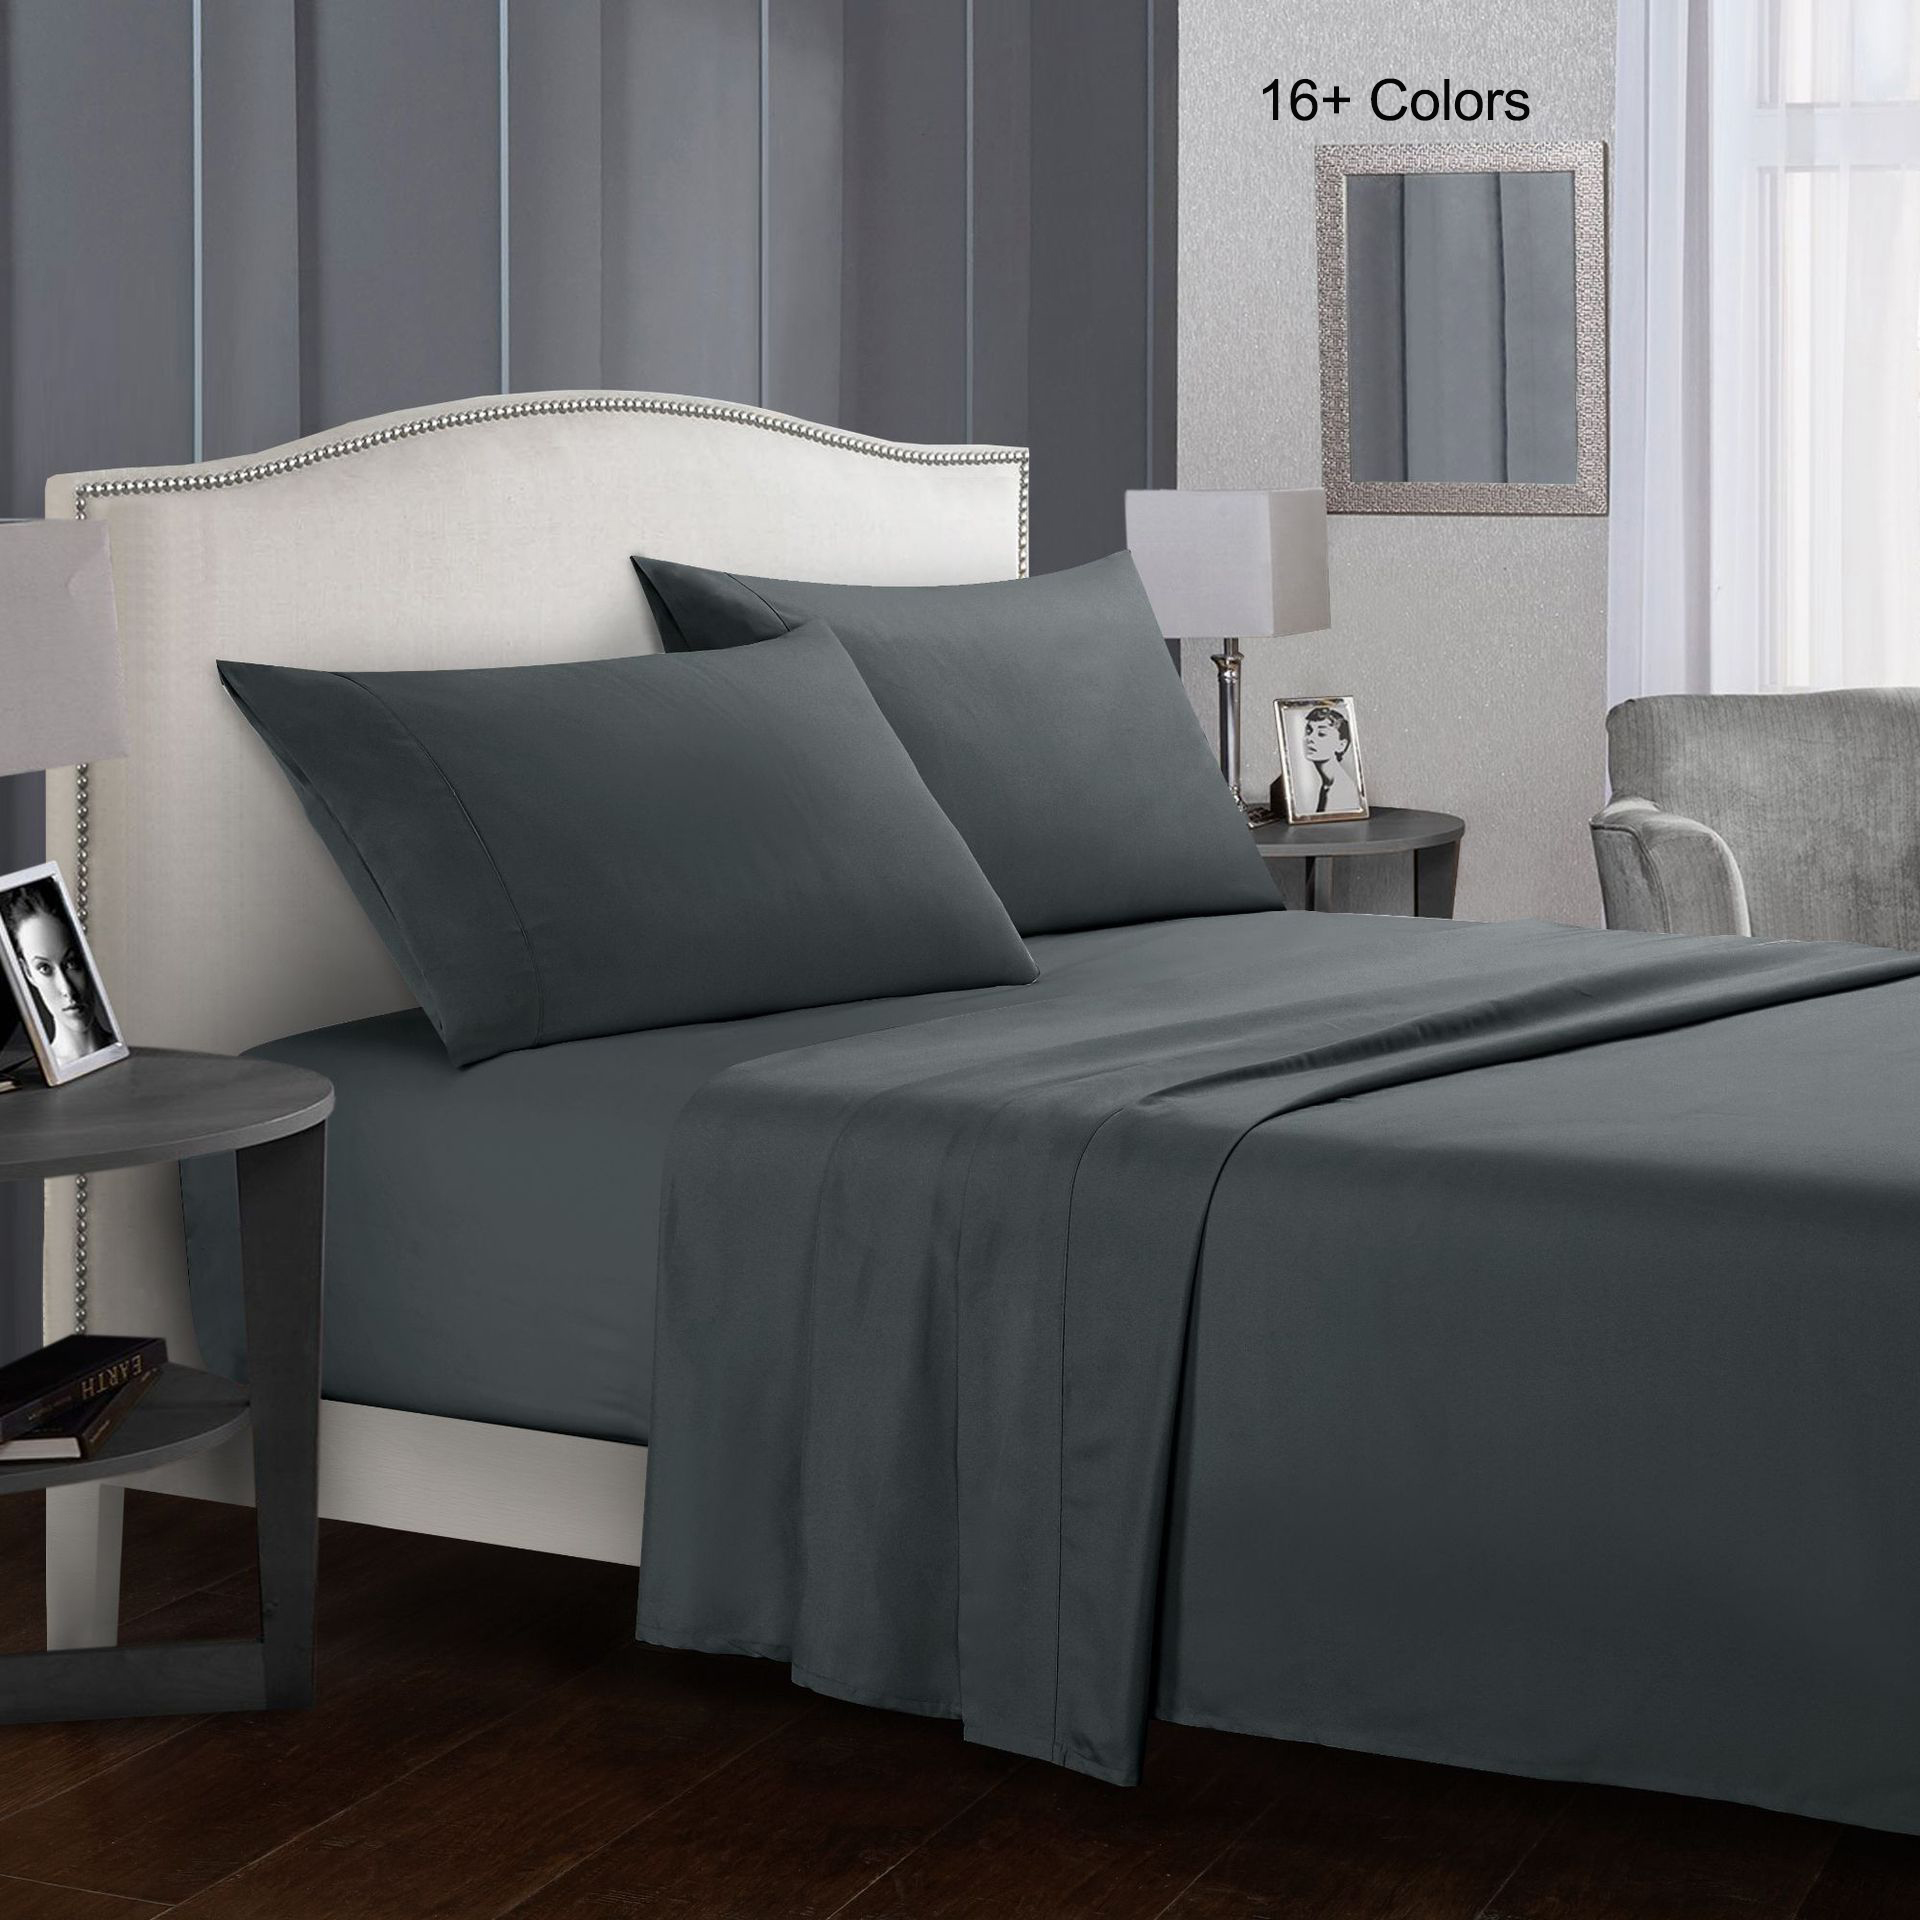 Bedding Bed Sheet Set - 4 Piece Queen Bedding - Soft Brushed Microfiber Fabric Queen Grey